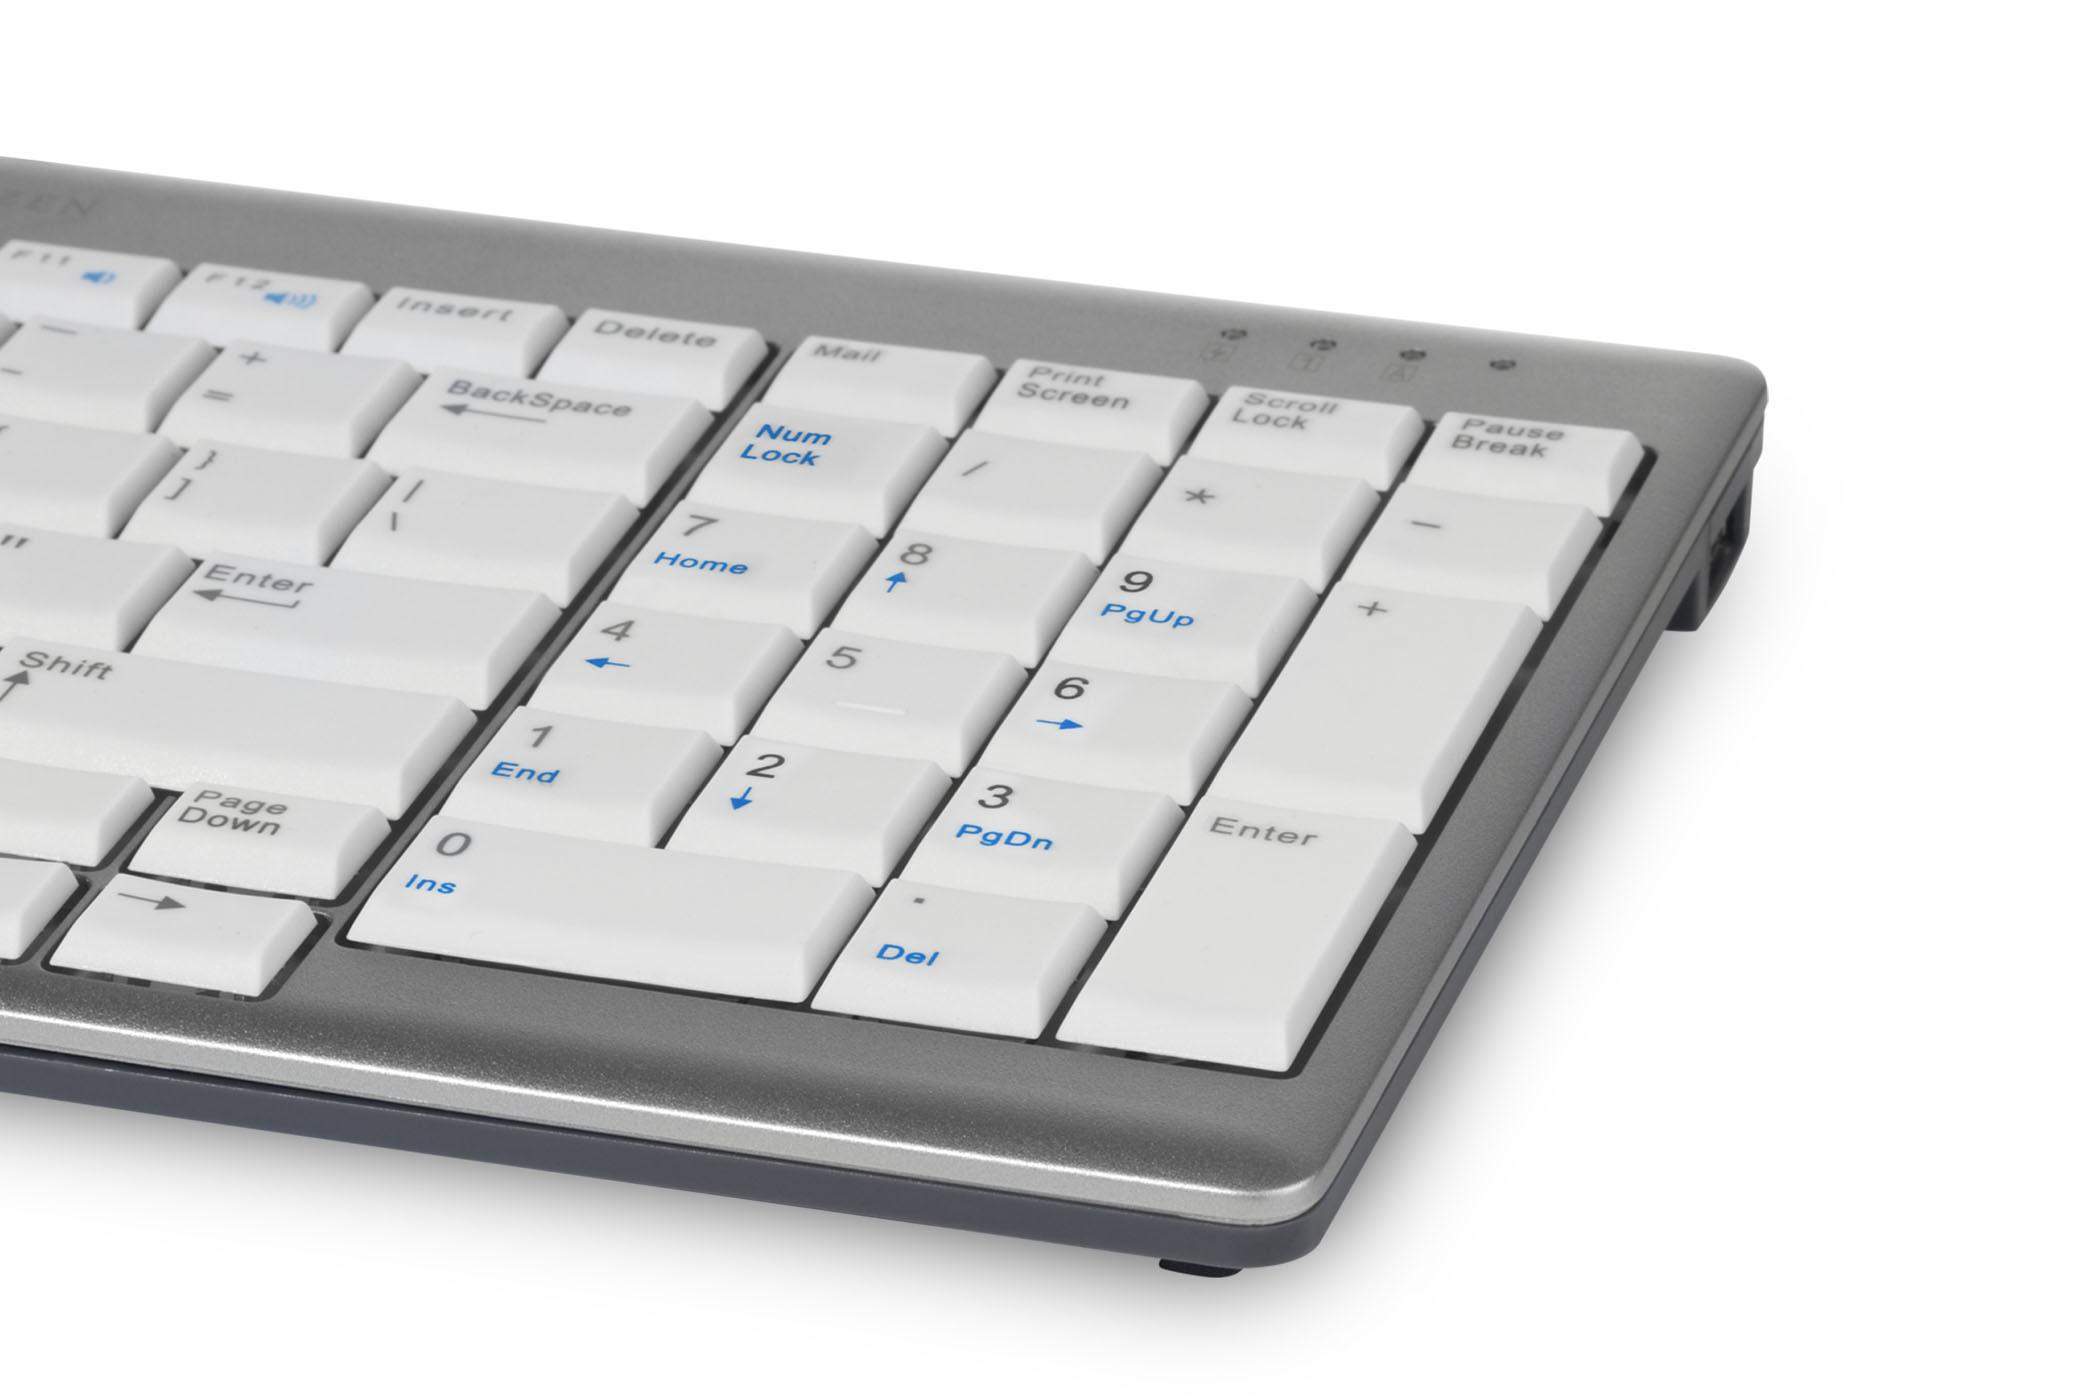 Clavier ergonomique UltraBoard 960 Standard Compact Keyboard-[product_reference]-Betterwork - Solutions ergonomiques - Télétrava